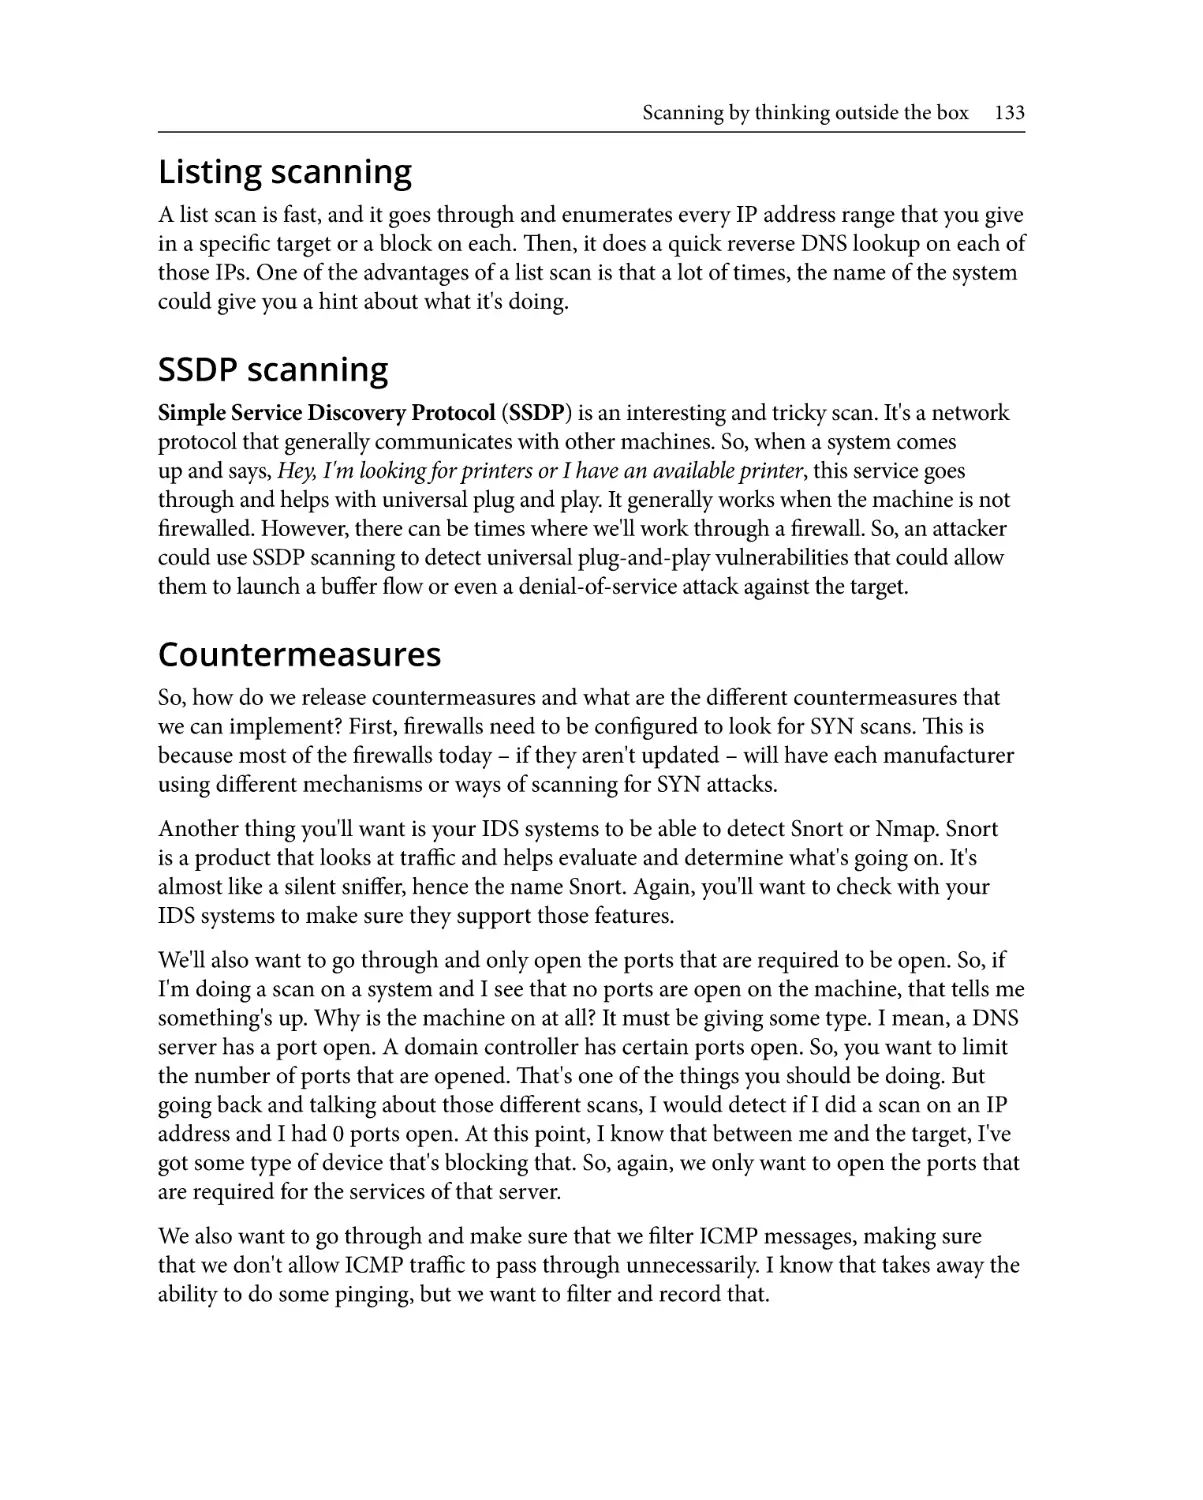 Listing scanning
SSDP scanning
Countermeasures